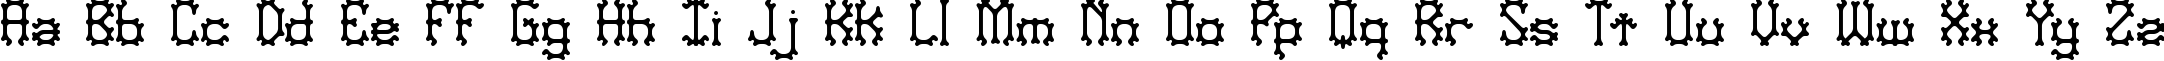 Пример написания английского алфавита шрифтом Nymonak BRK